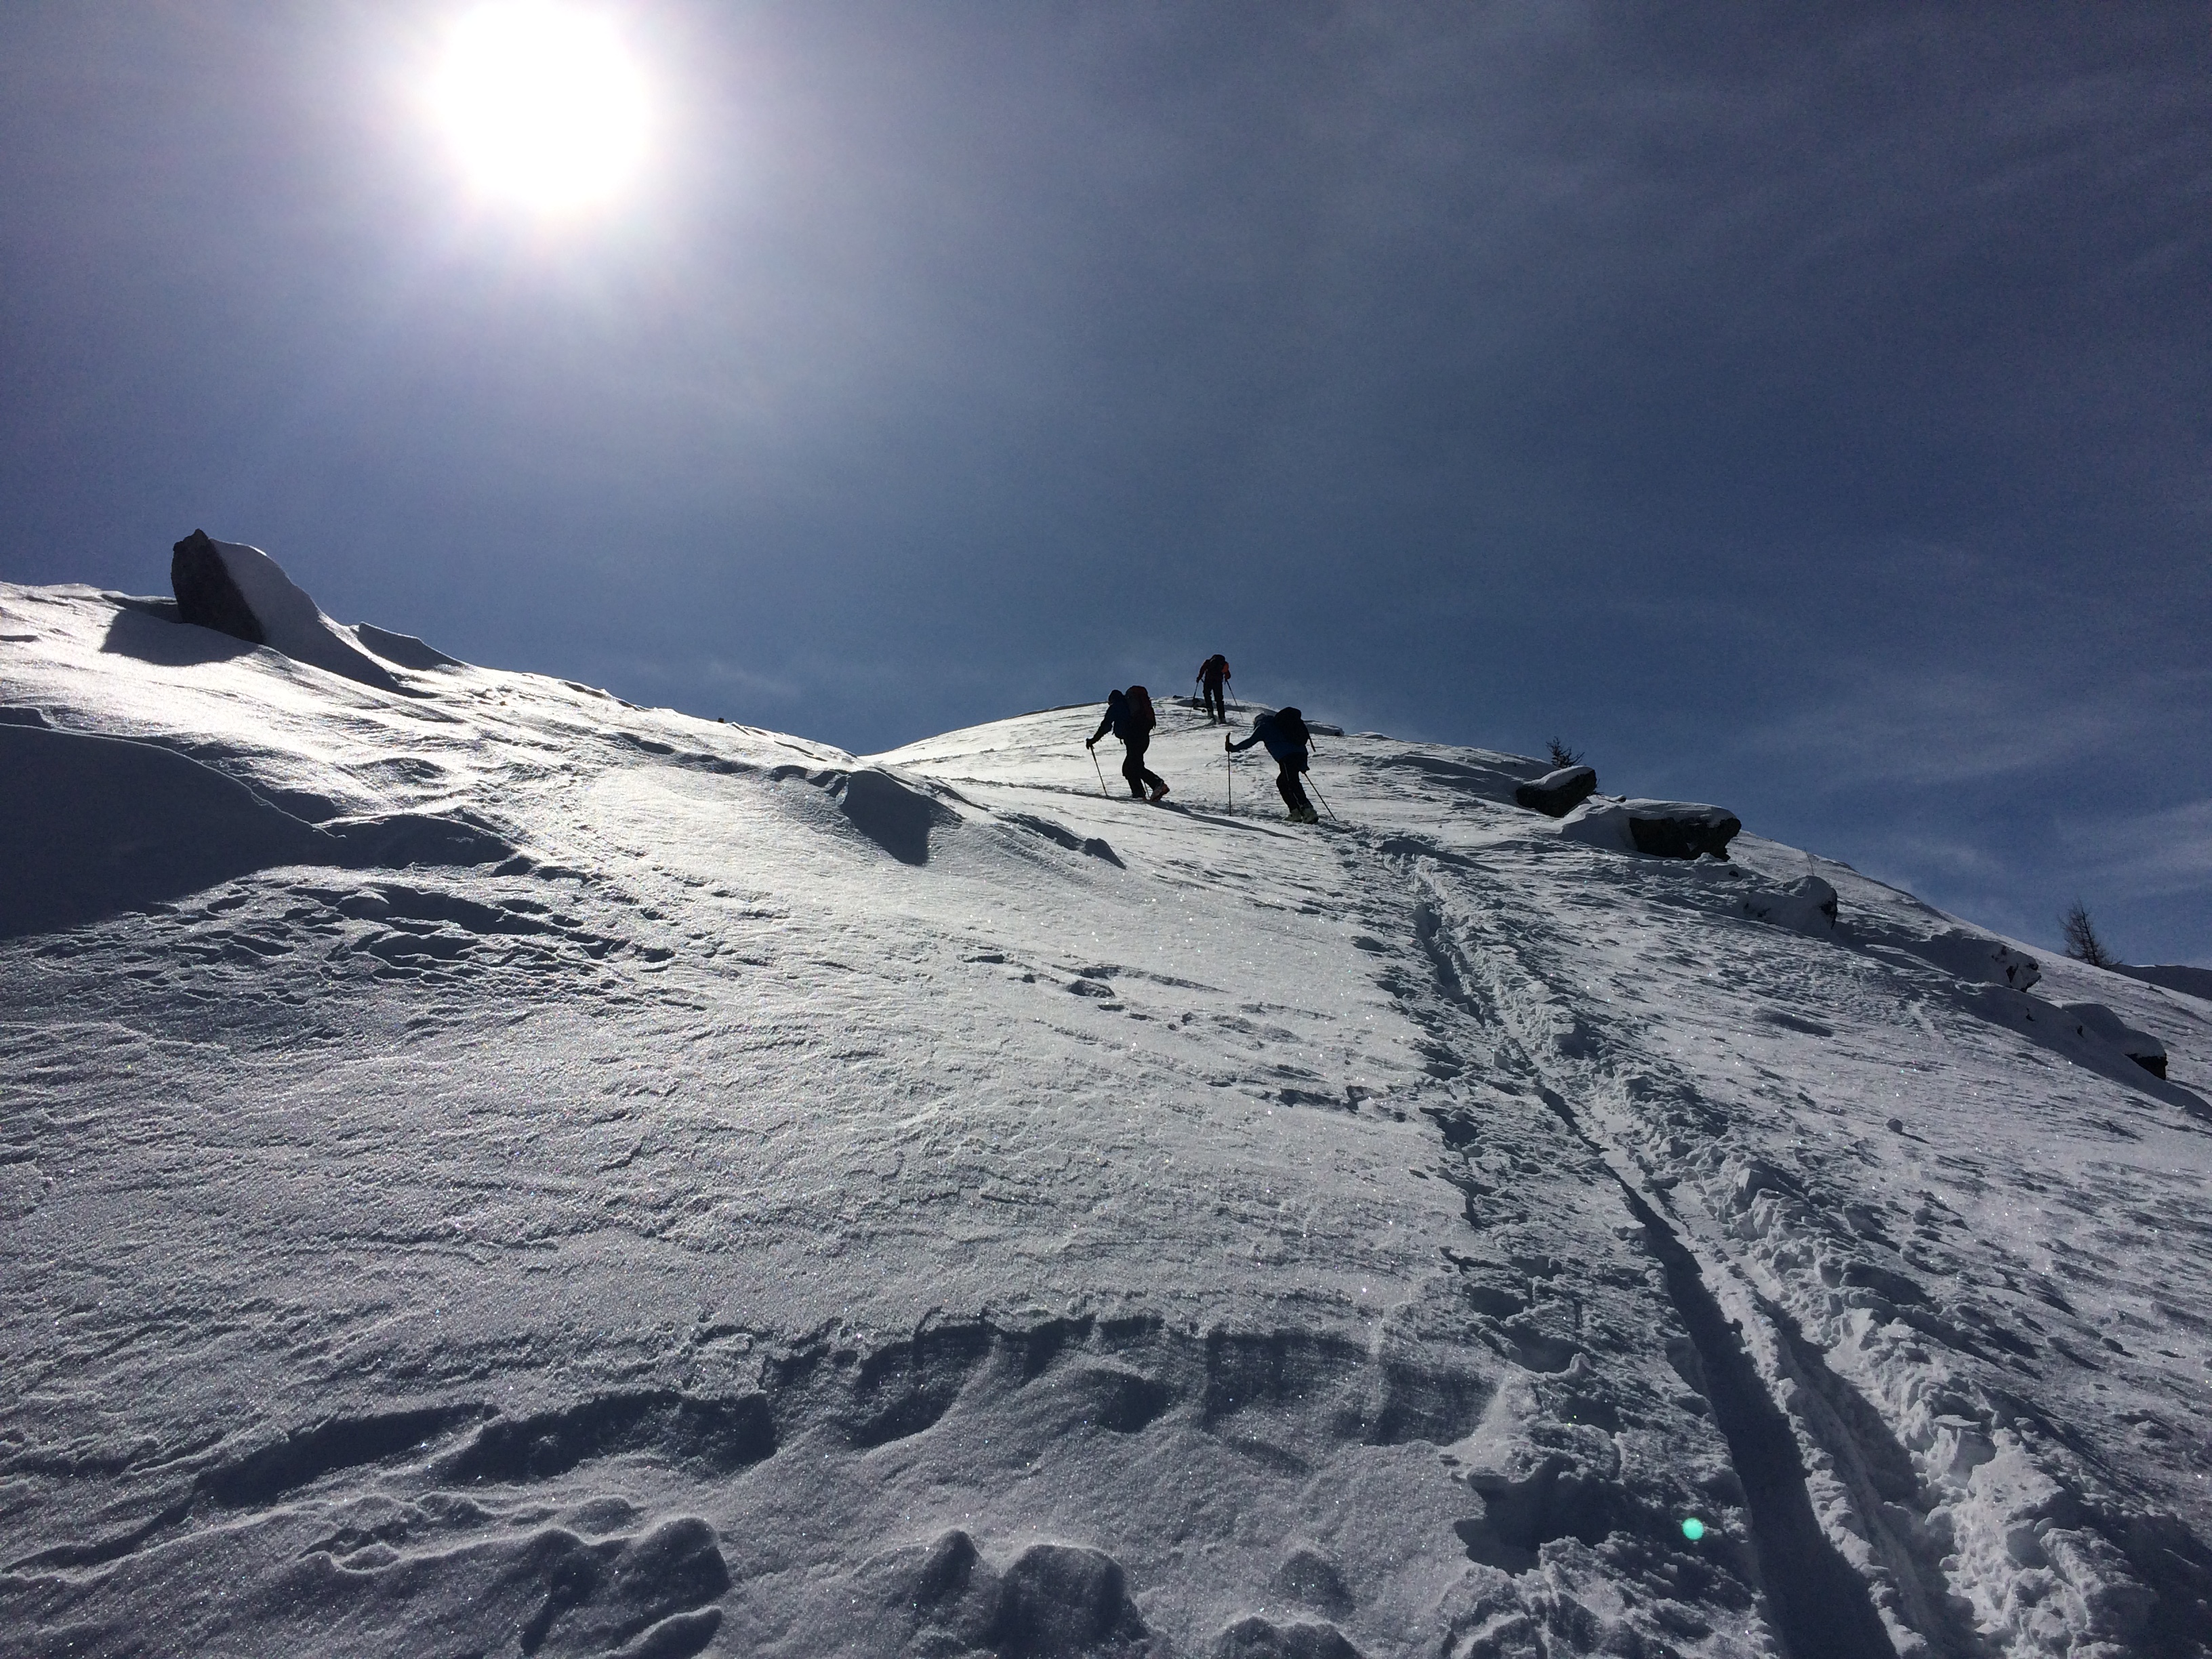 Hiking in the snow & Ski mountaineering